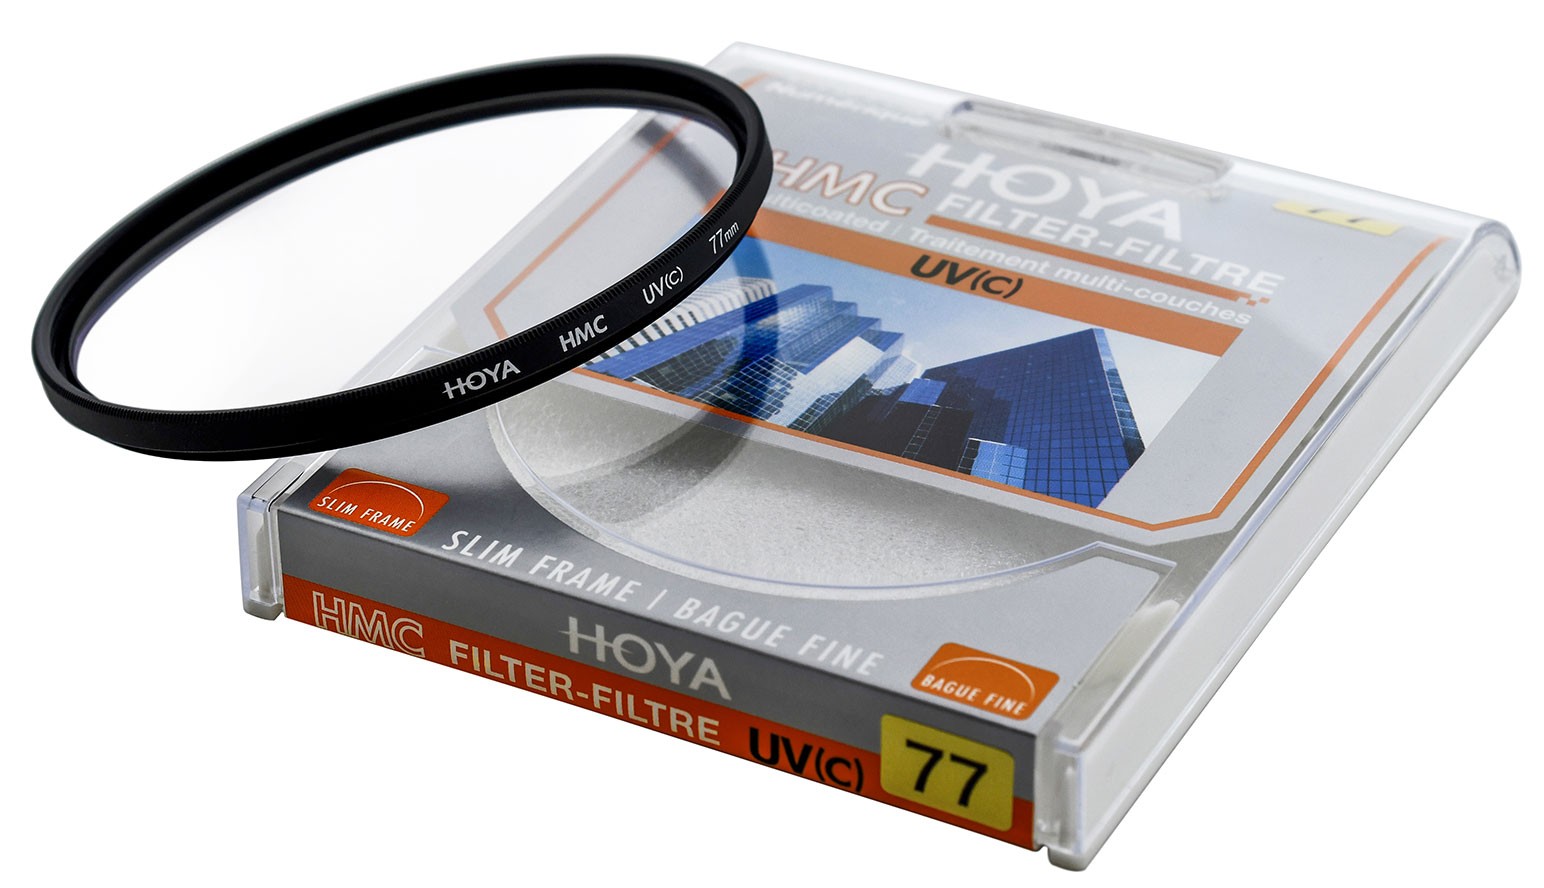 Hoya 67mm UV HMC DIGITALE C sottile struttura Lente Filtro-NUOVO e SIGILLATO UK STOCK 